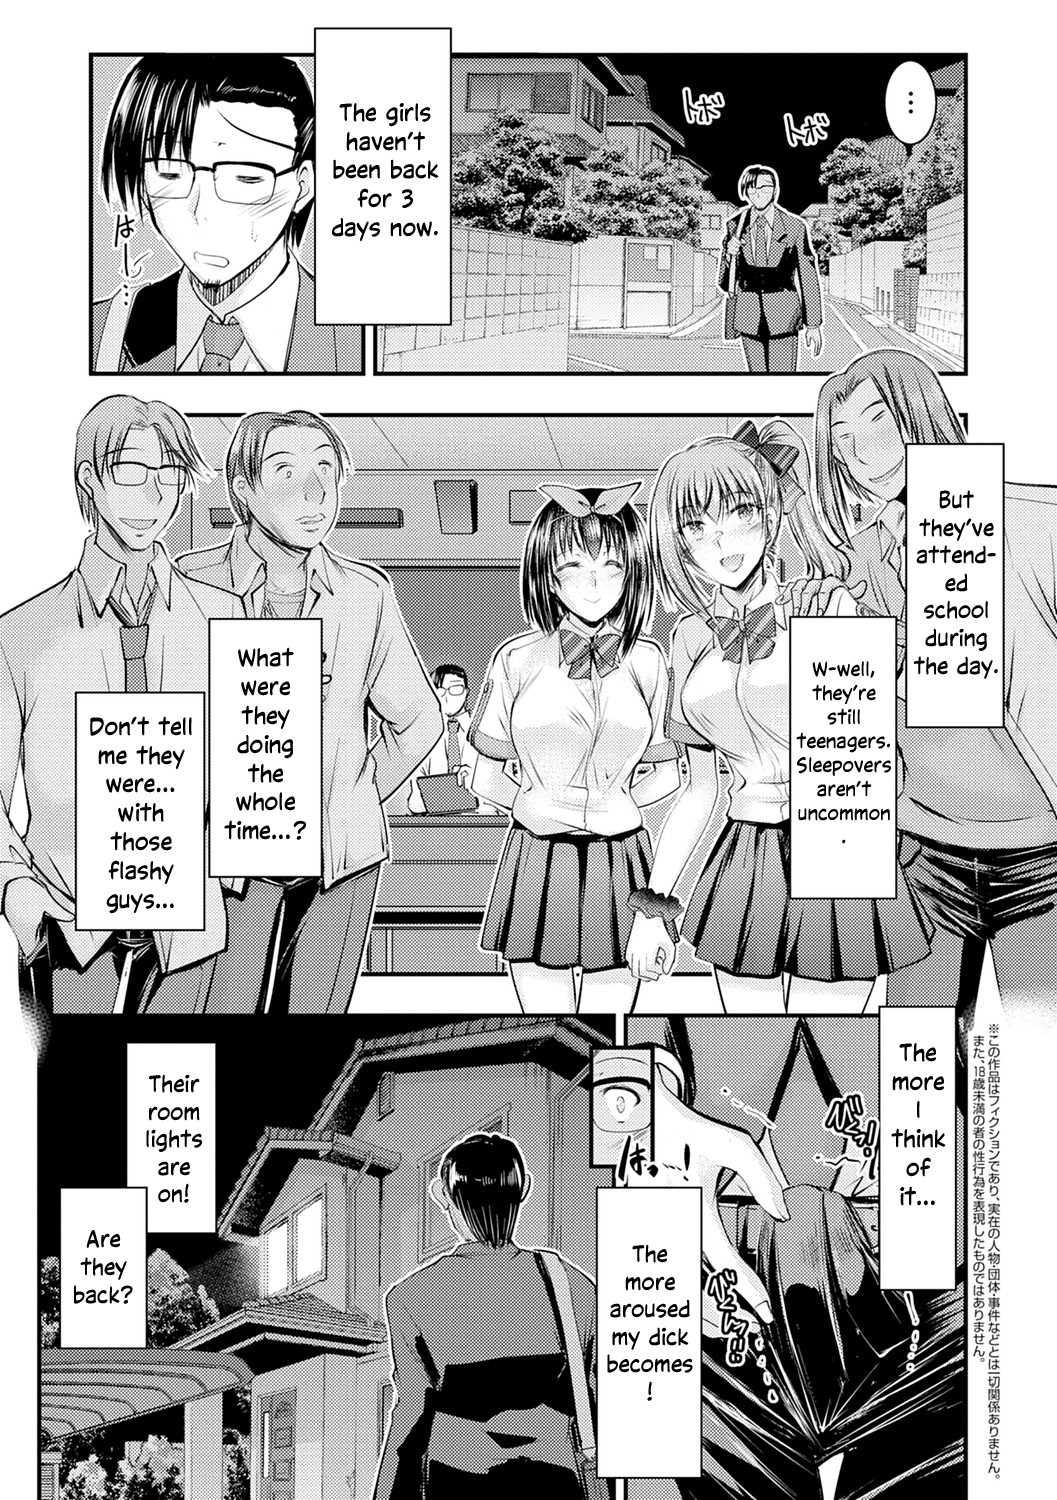 Hentai Manga Comic-The Niece Paraiso-Chapter 4-6-1